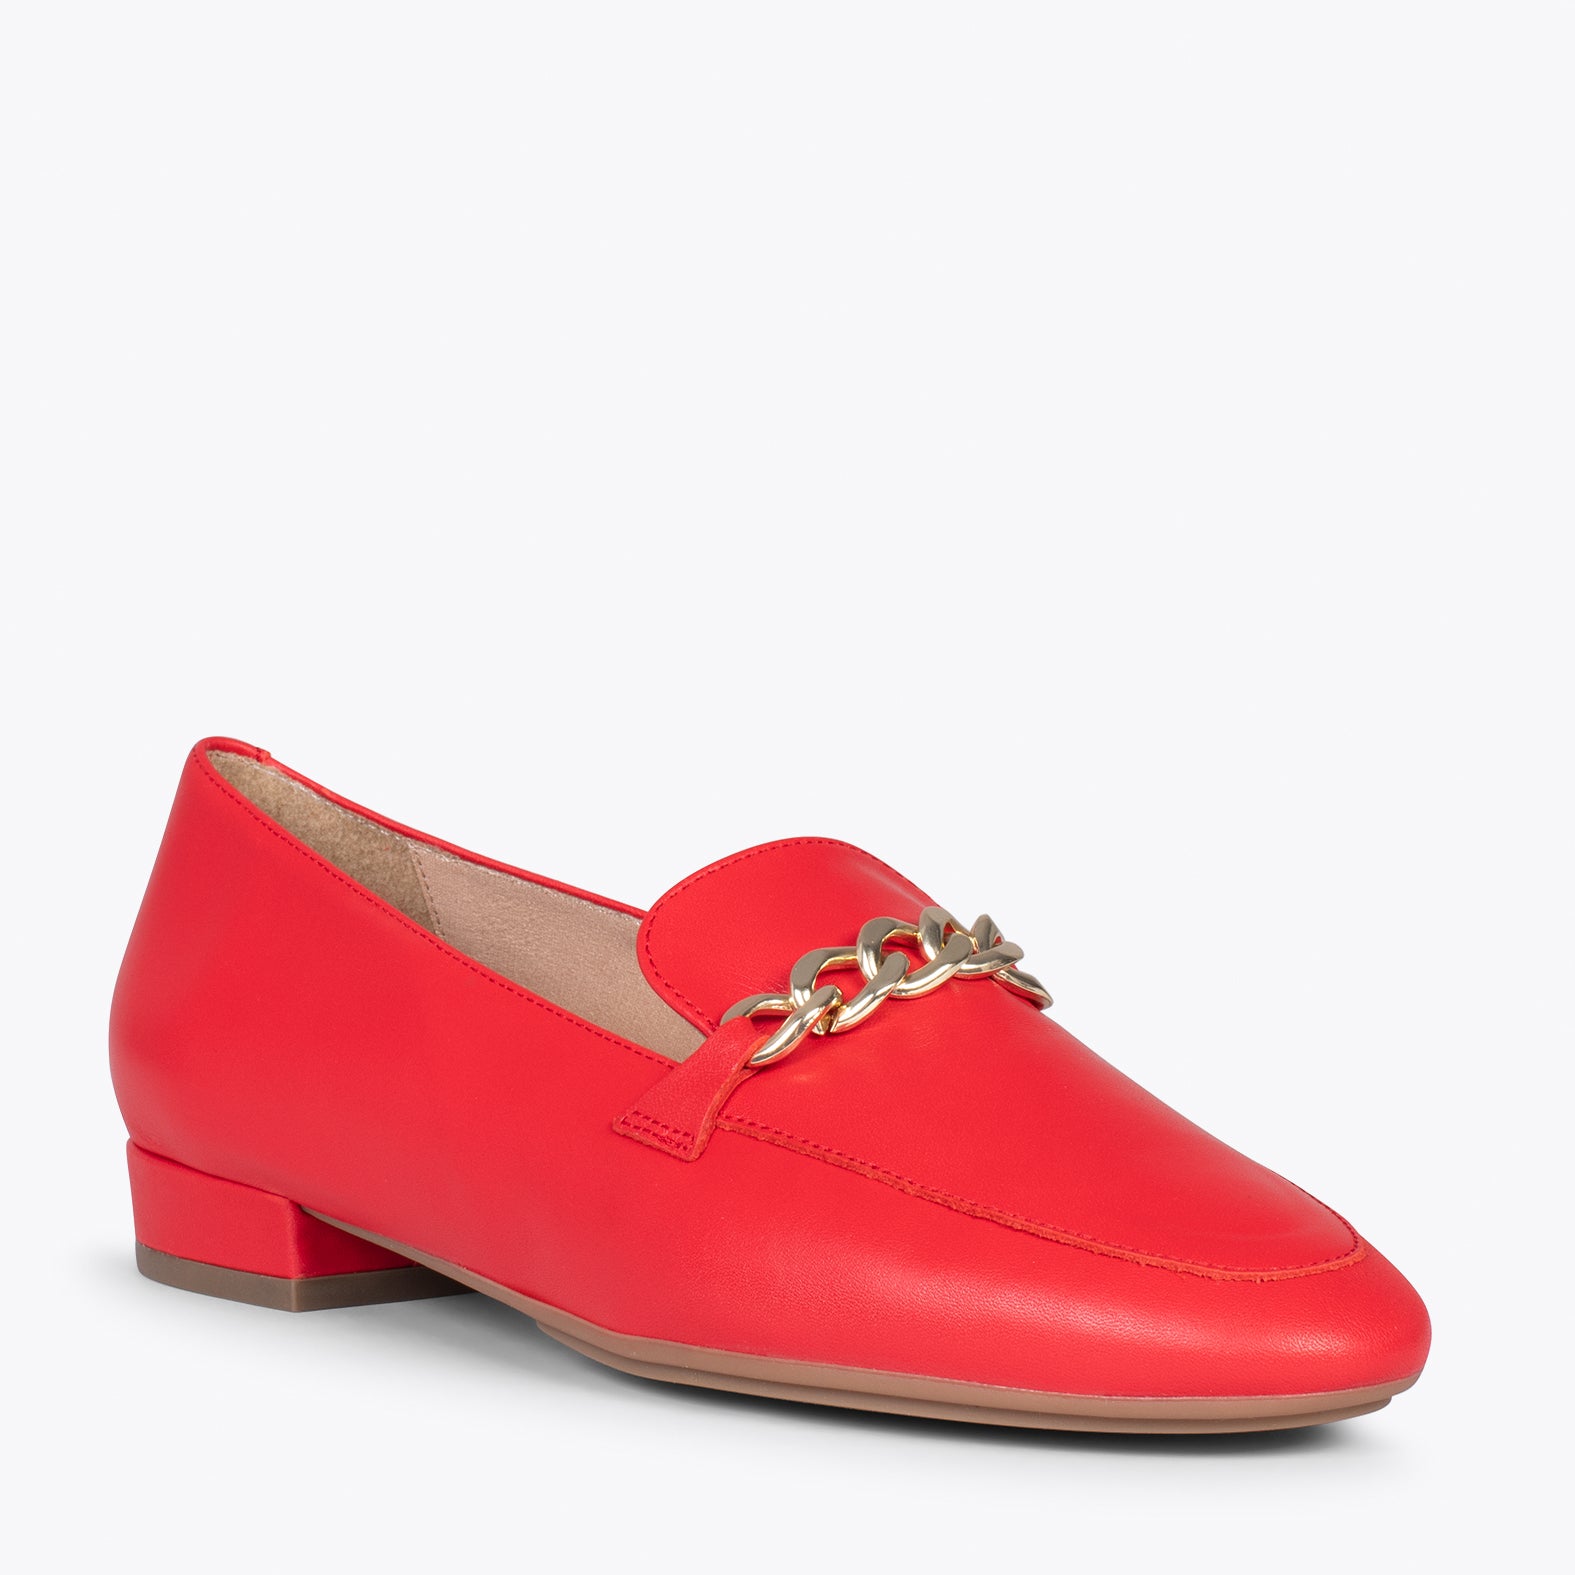 CHAIN – RED elegant moccasins